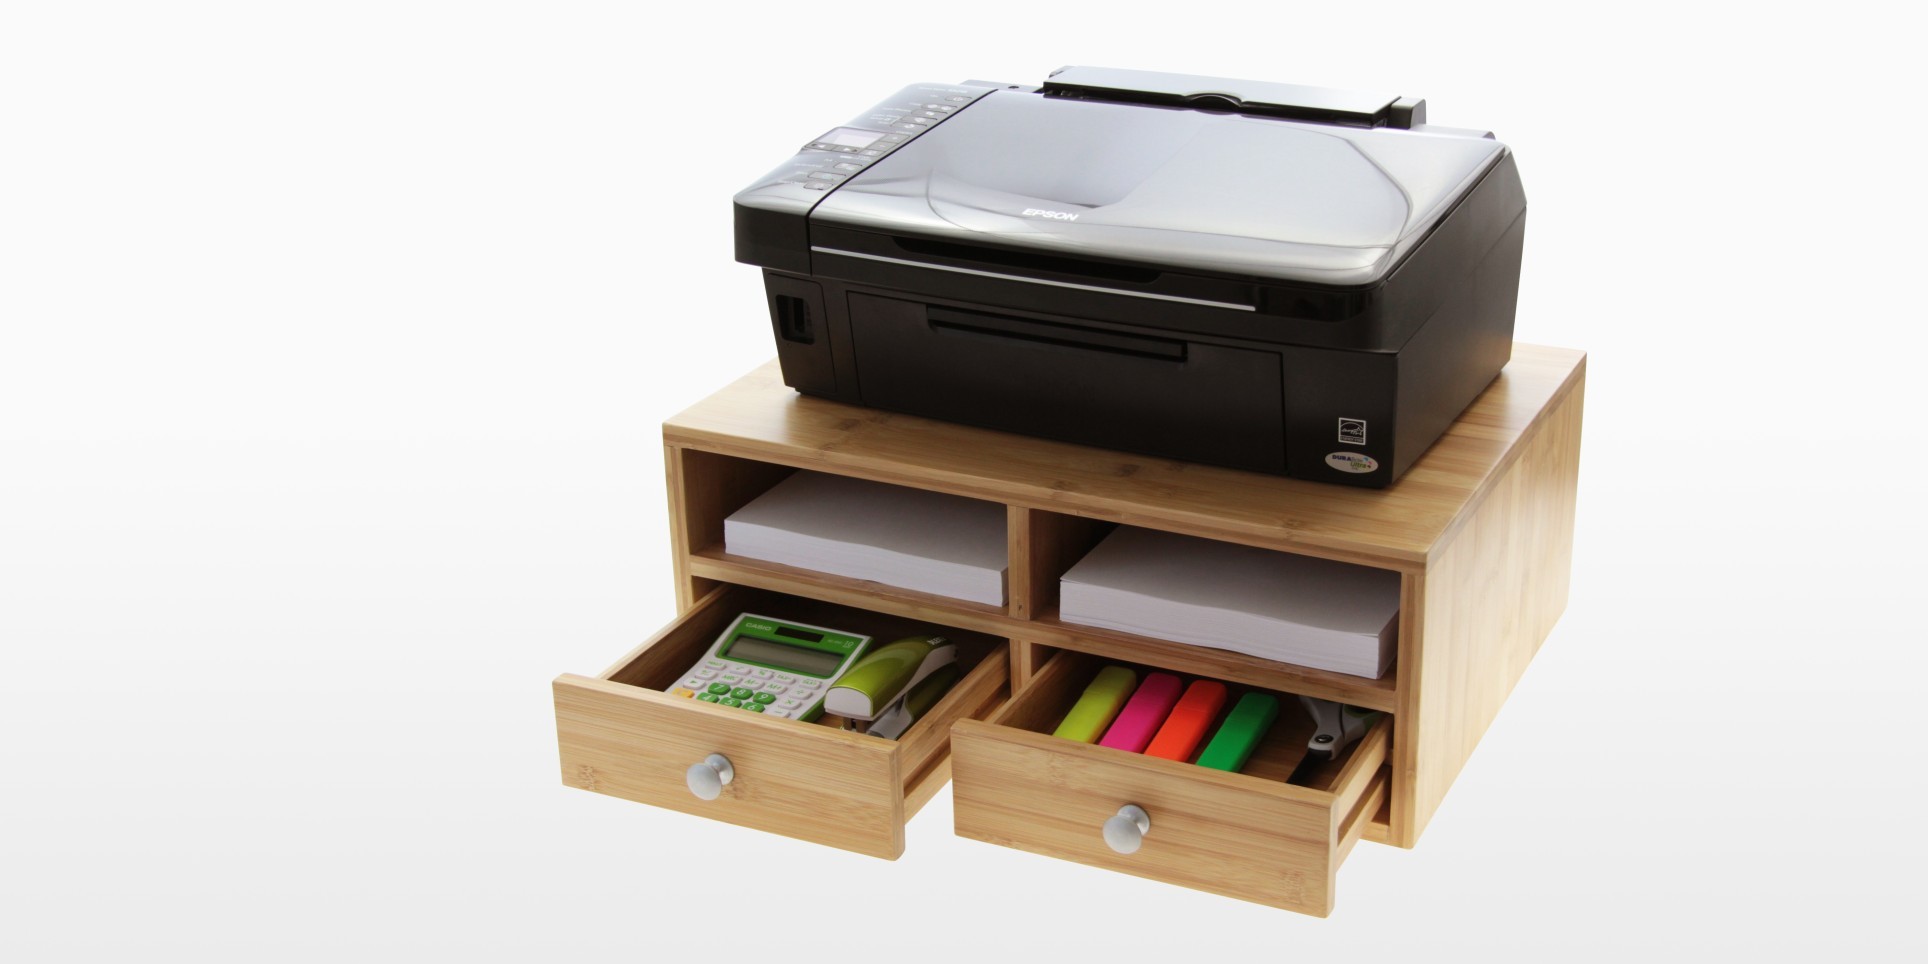 Printer Table, Printer organiser